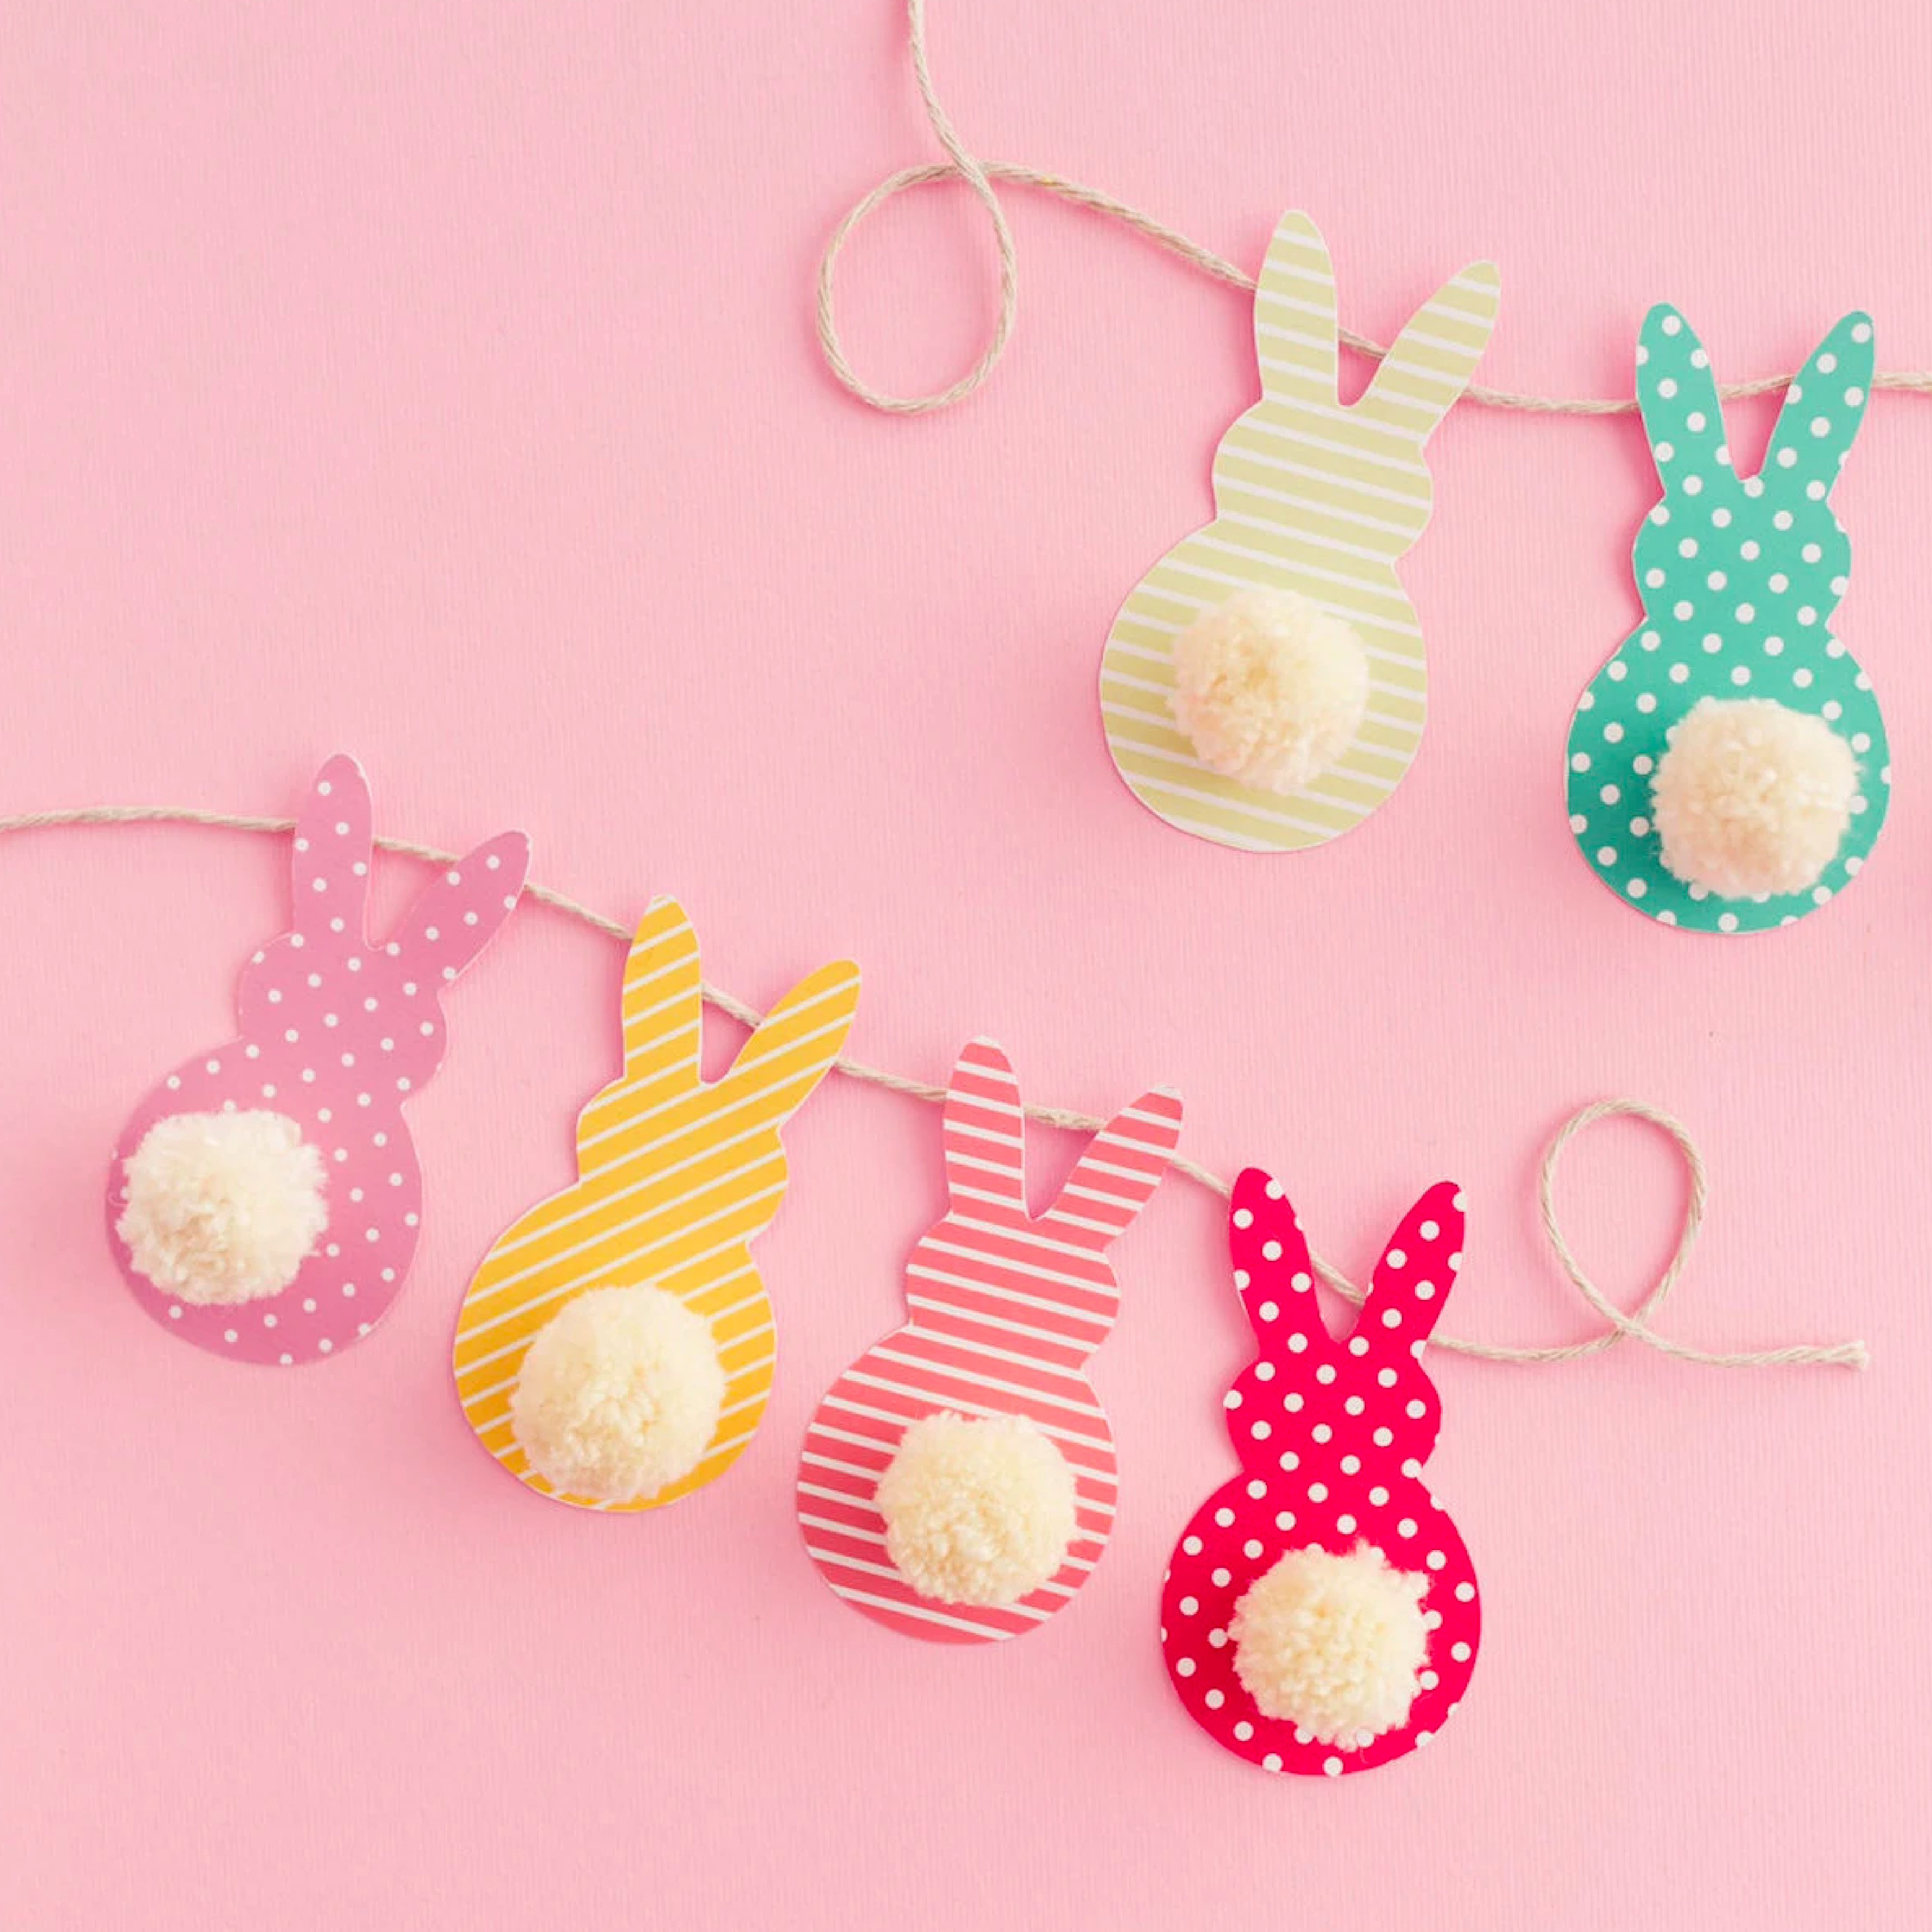 Papier Mache Bunny, Kids' Crafts, Fun Craft Ideas